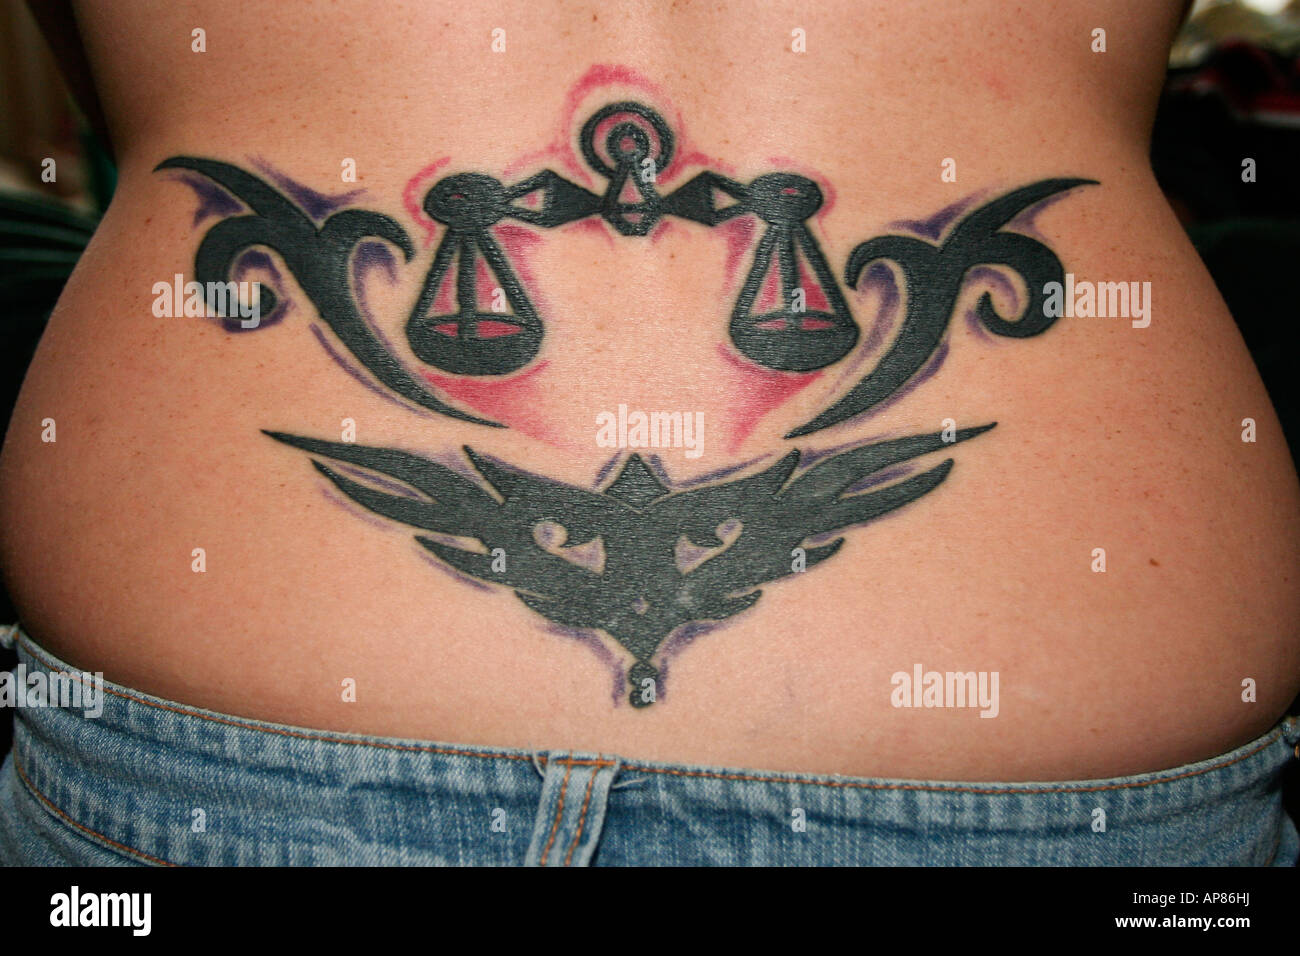 Female Lower Back Tattoo Stock Photo: 15707309 - Alamy